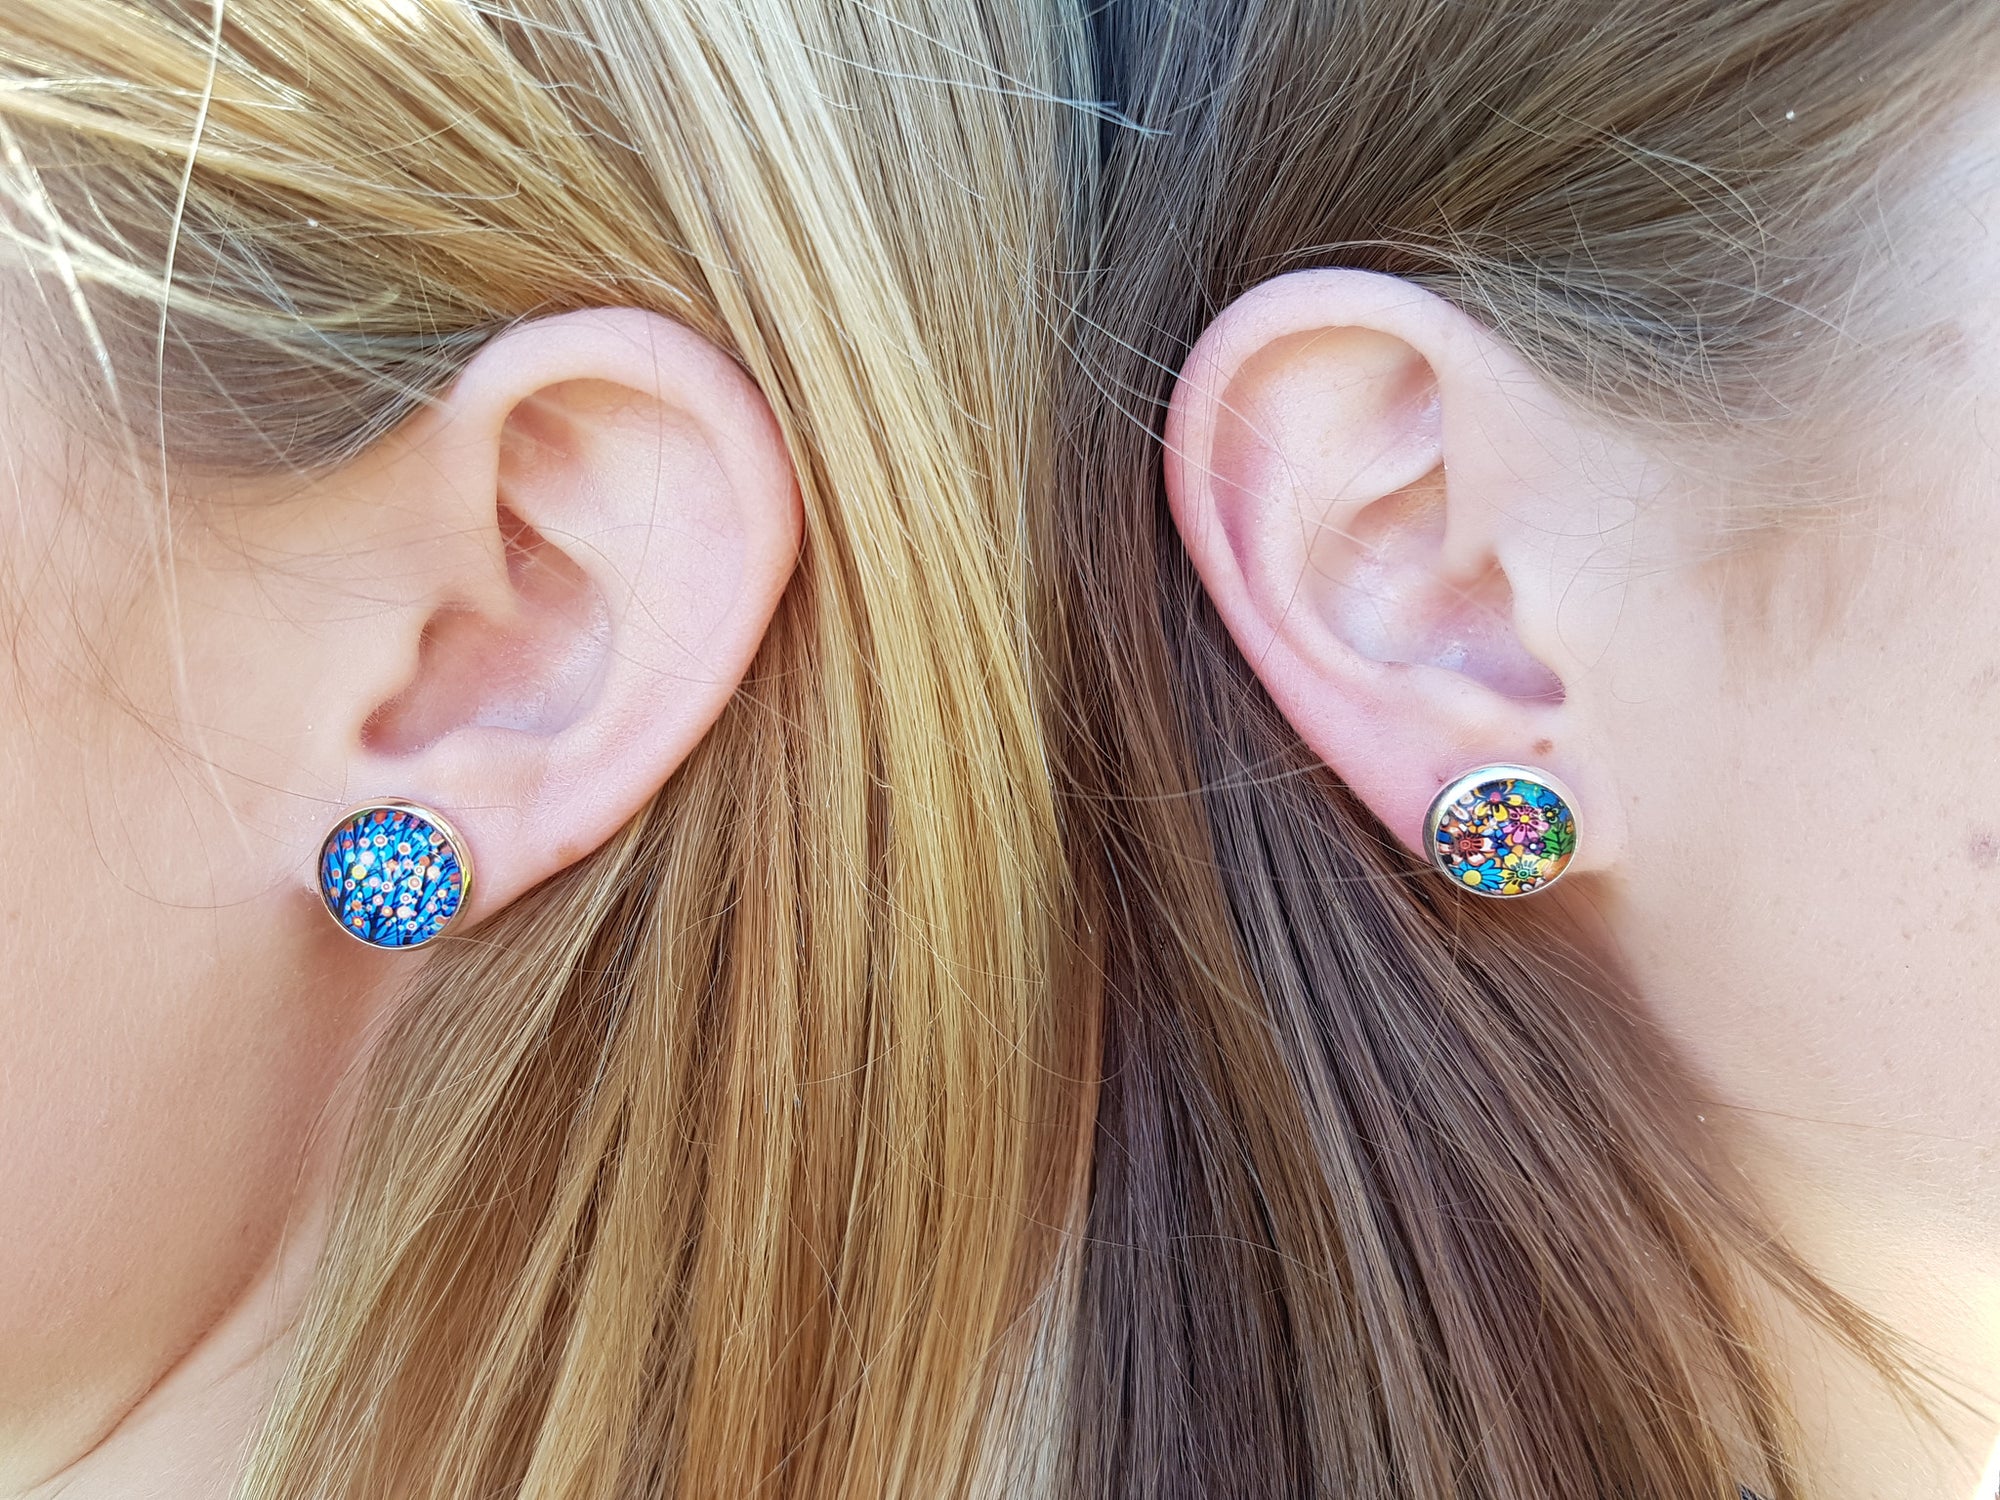 Tree of Life Stud Earrings | Ella & Fern